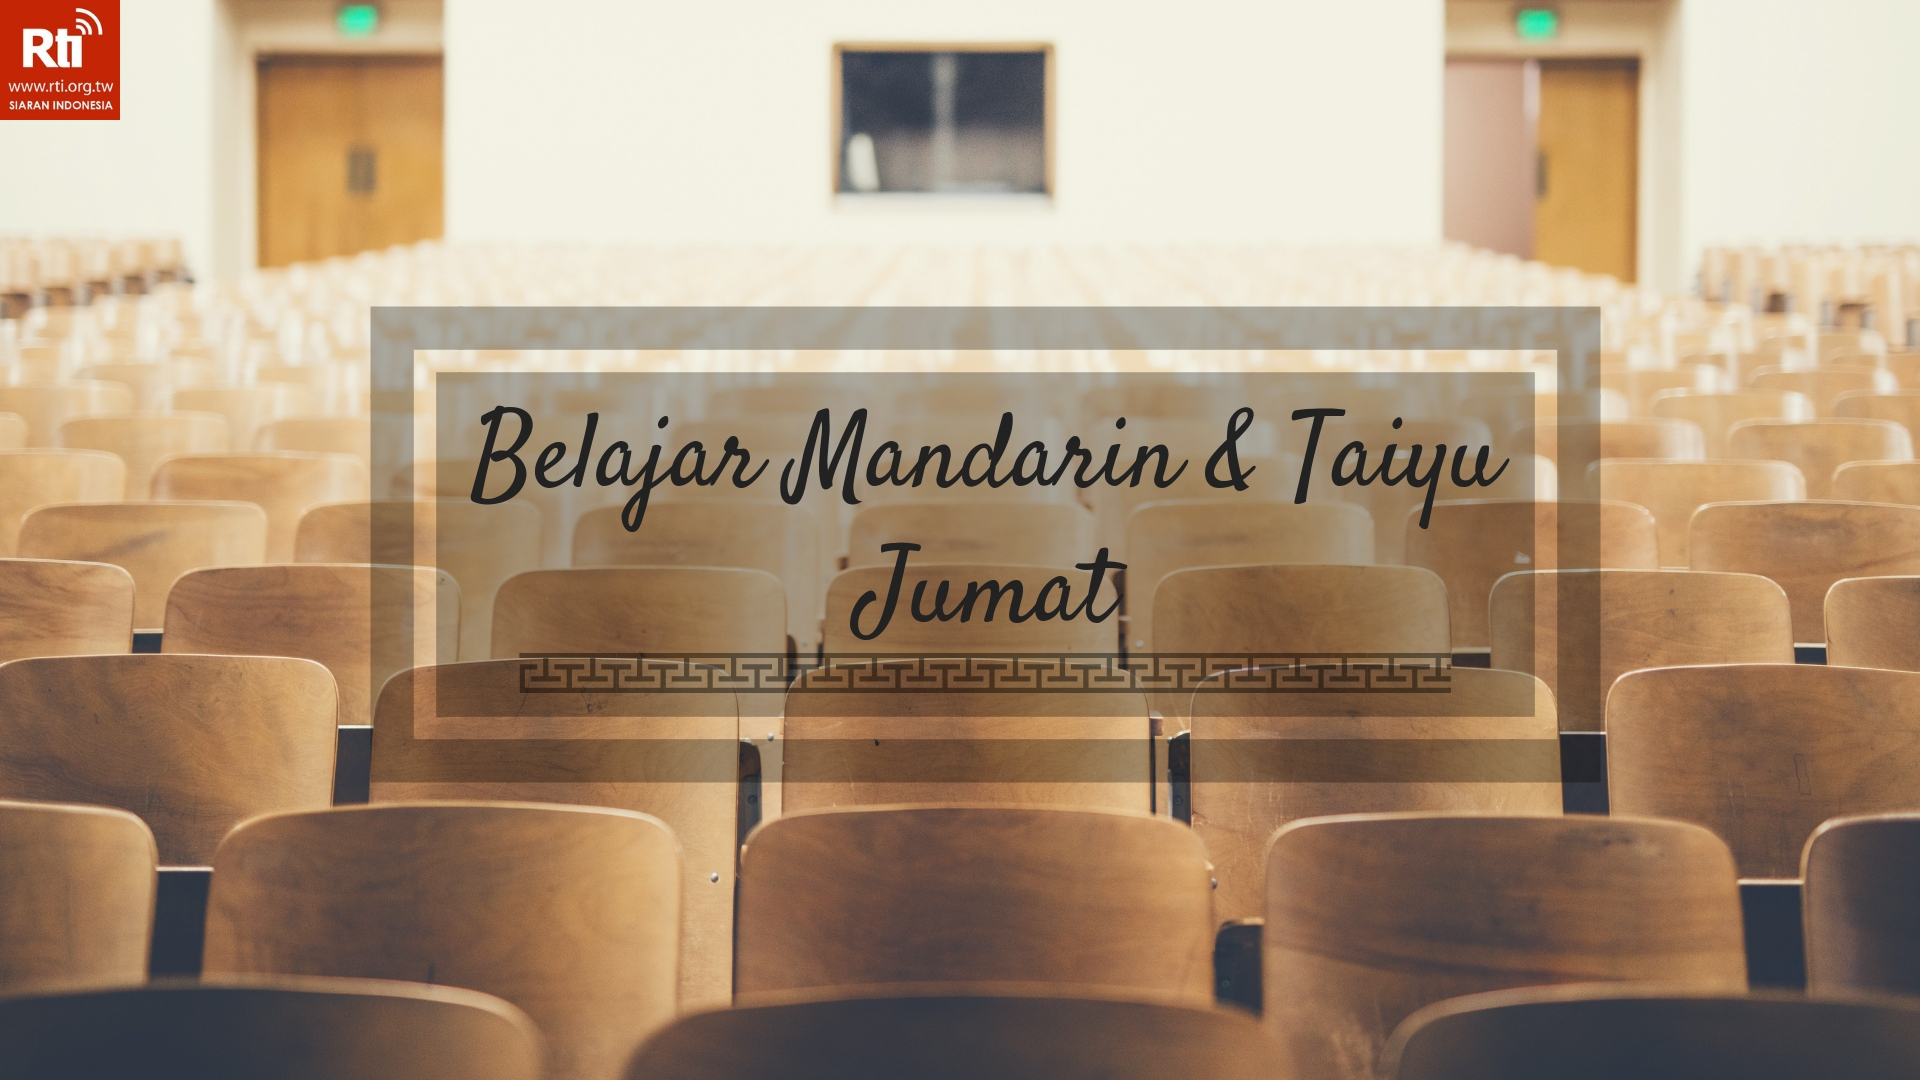 Belajar Mandarin taiyu dan Bahasa Indonesia